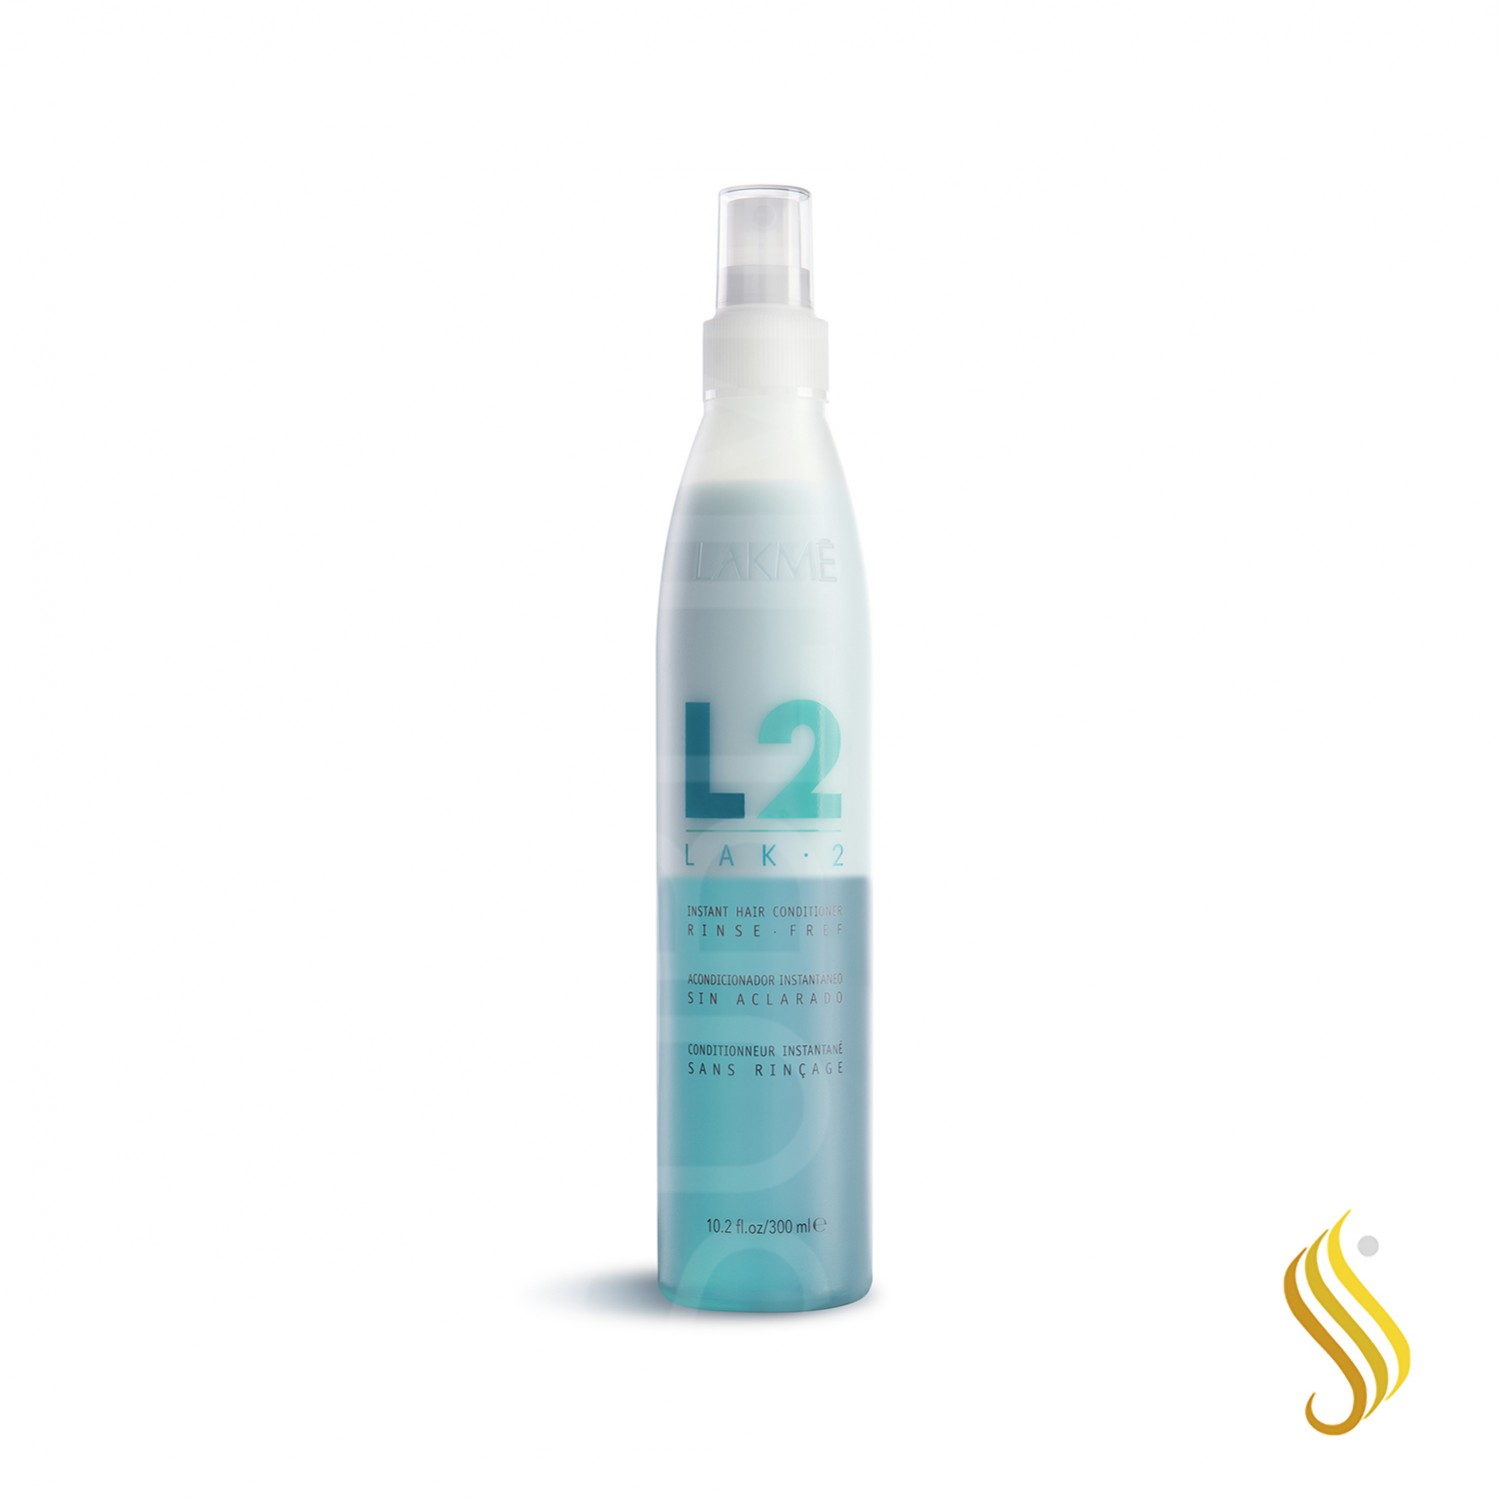 Lakme Lak 2 Instant Hair Spray Conditioner 300ml